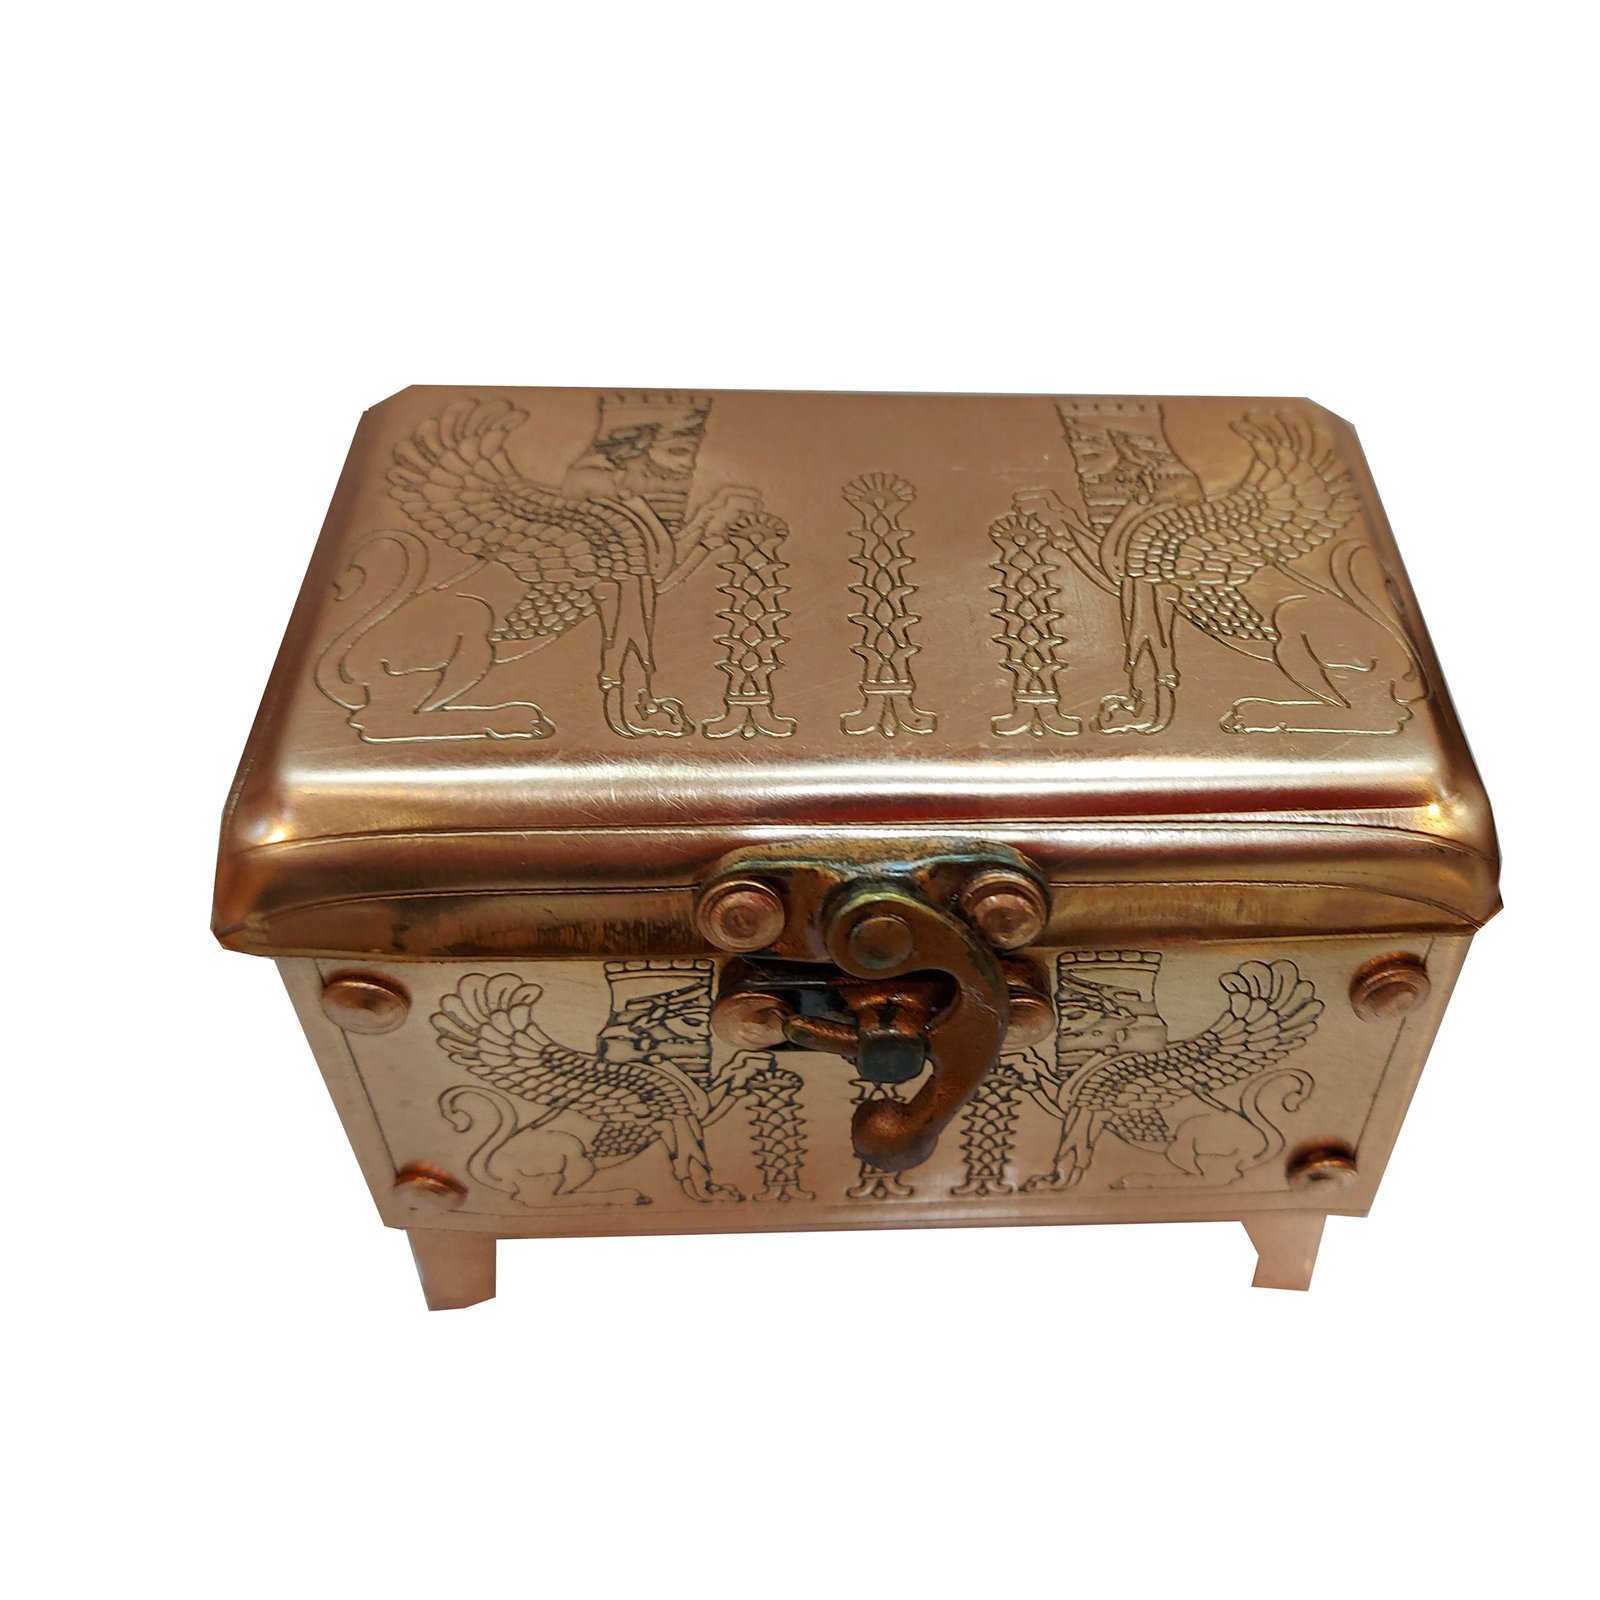 Handicraft Copper box Achaemenid model code 4589,buy copper,buy copper things,buy copper stuff,buy copper handmades